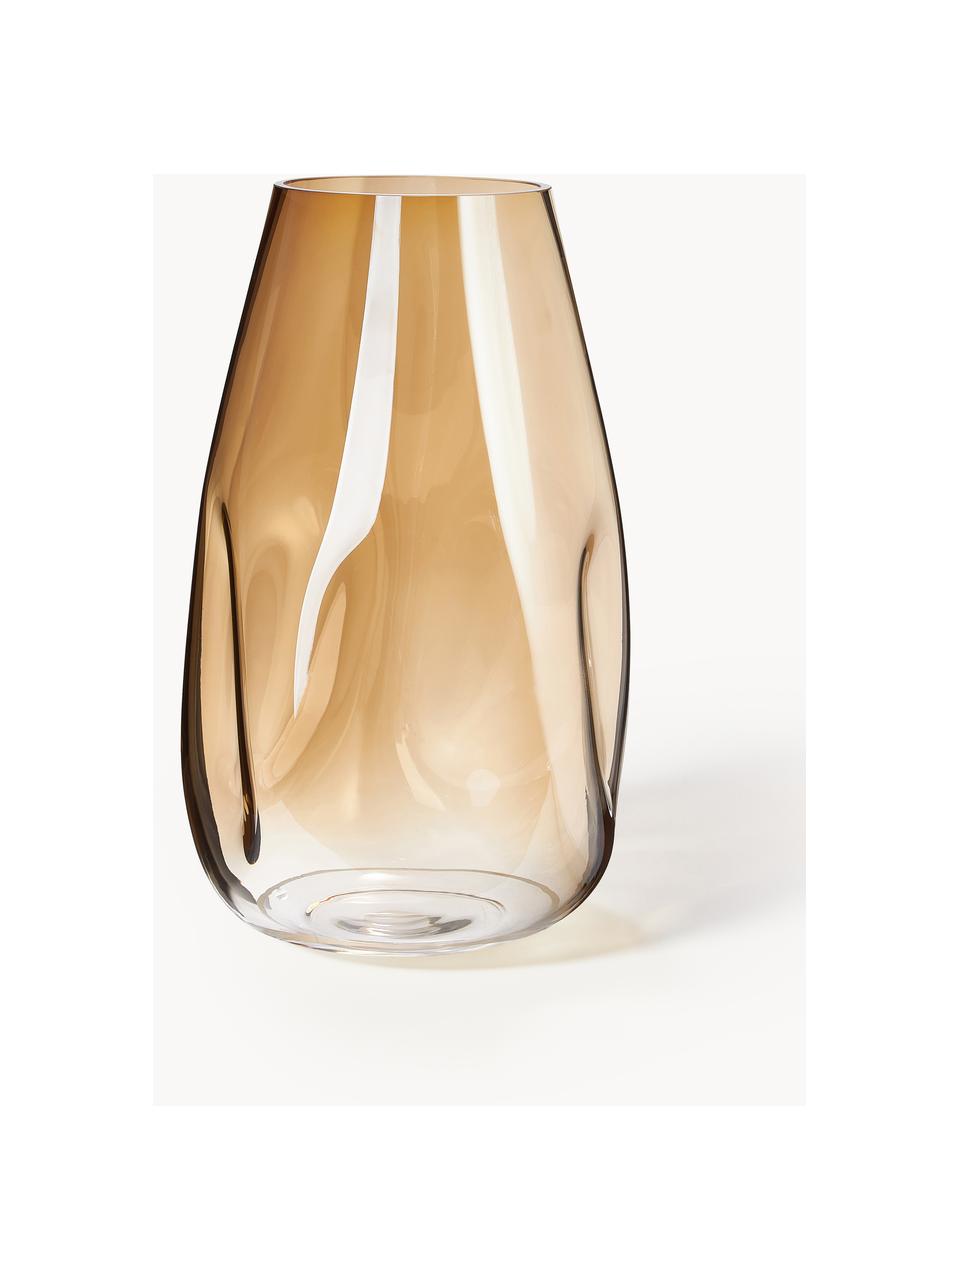 Grote mondgeblazen glazen vaas Luster, H 35 cm, Mondgeblazen glas, Oker, Ø 20 x H 35 cm